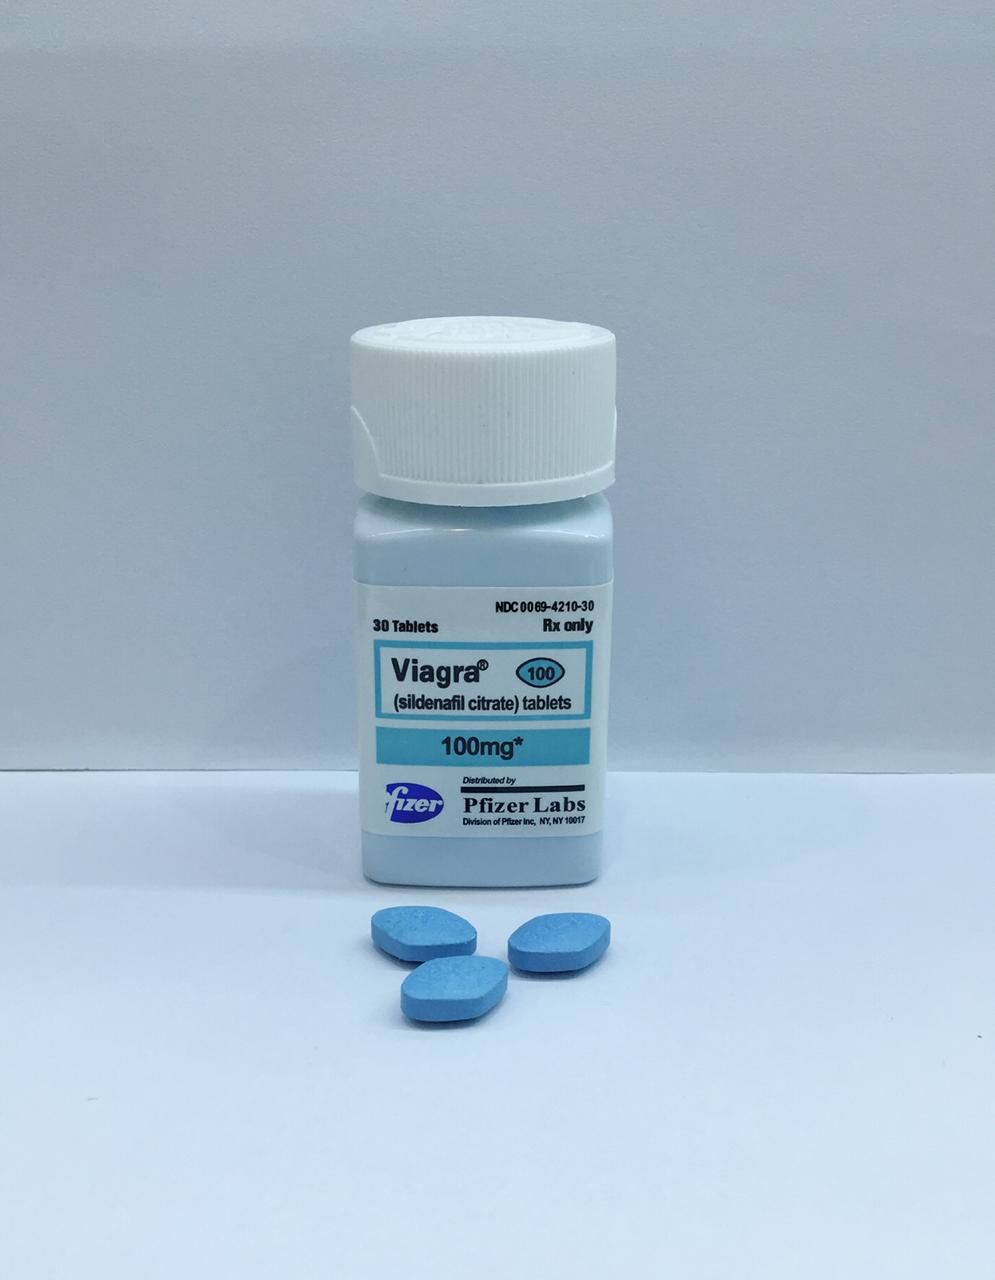 viagra-100mg-30-tablets